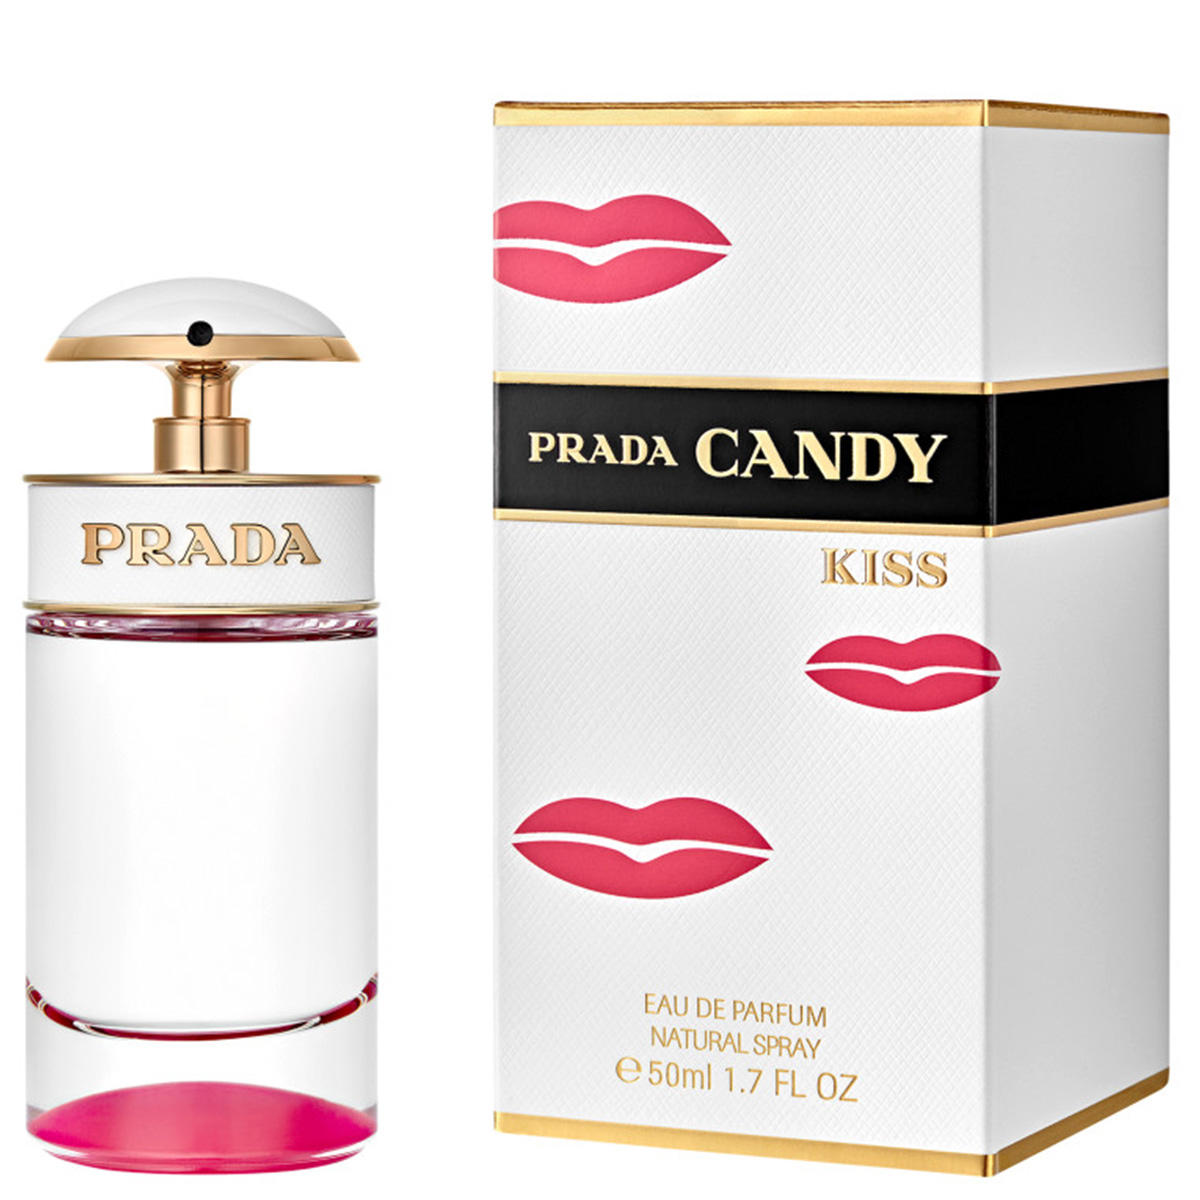 Prada Candy Kiss Eau de Parfum 50 ml - 2